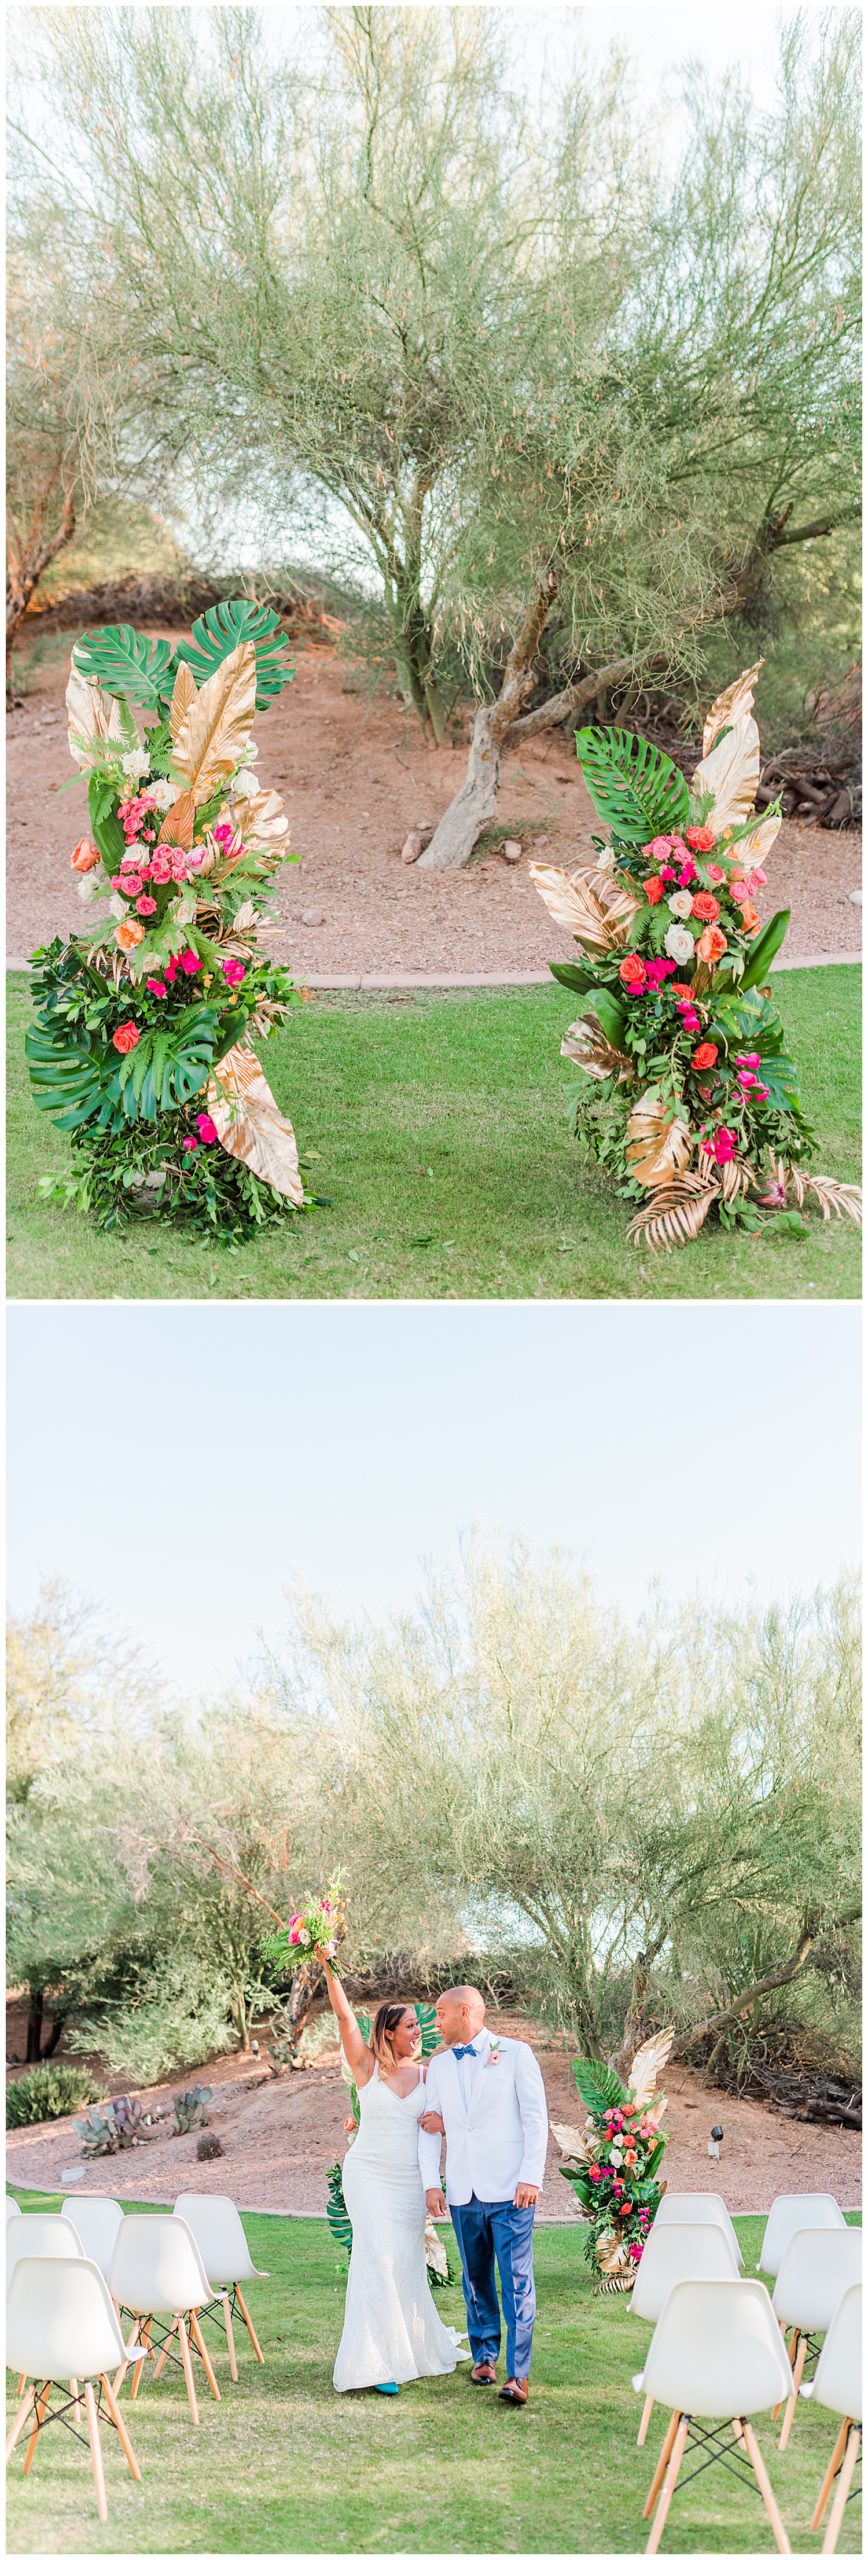 wedding+inspo+New+Mexico+wedding+photographer+vibrant+wedding+tropical+wedding+decor+palm+cake+balloons+ceremony+bride+groom+wedding+dress+albuquerque+photographer